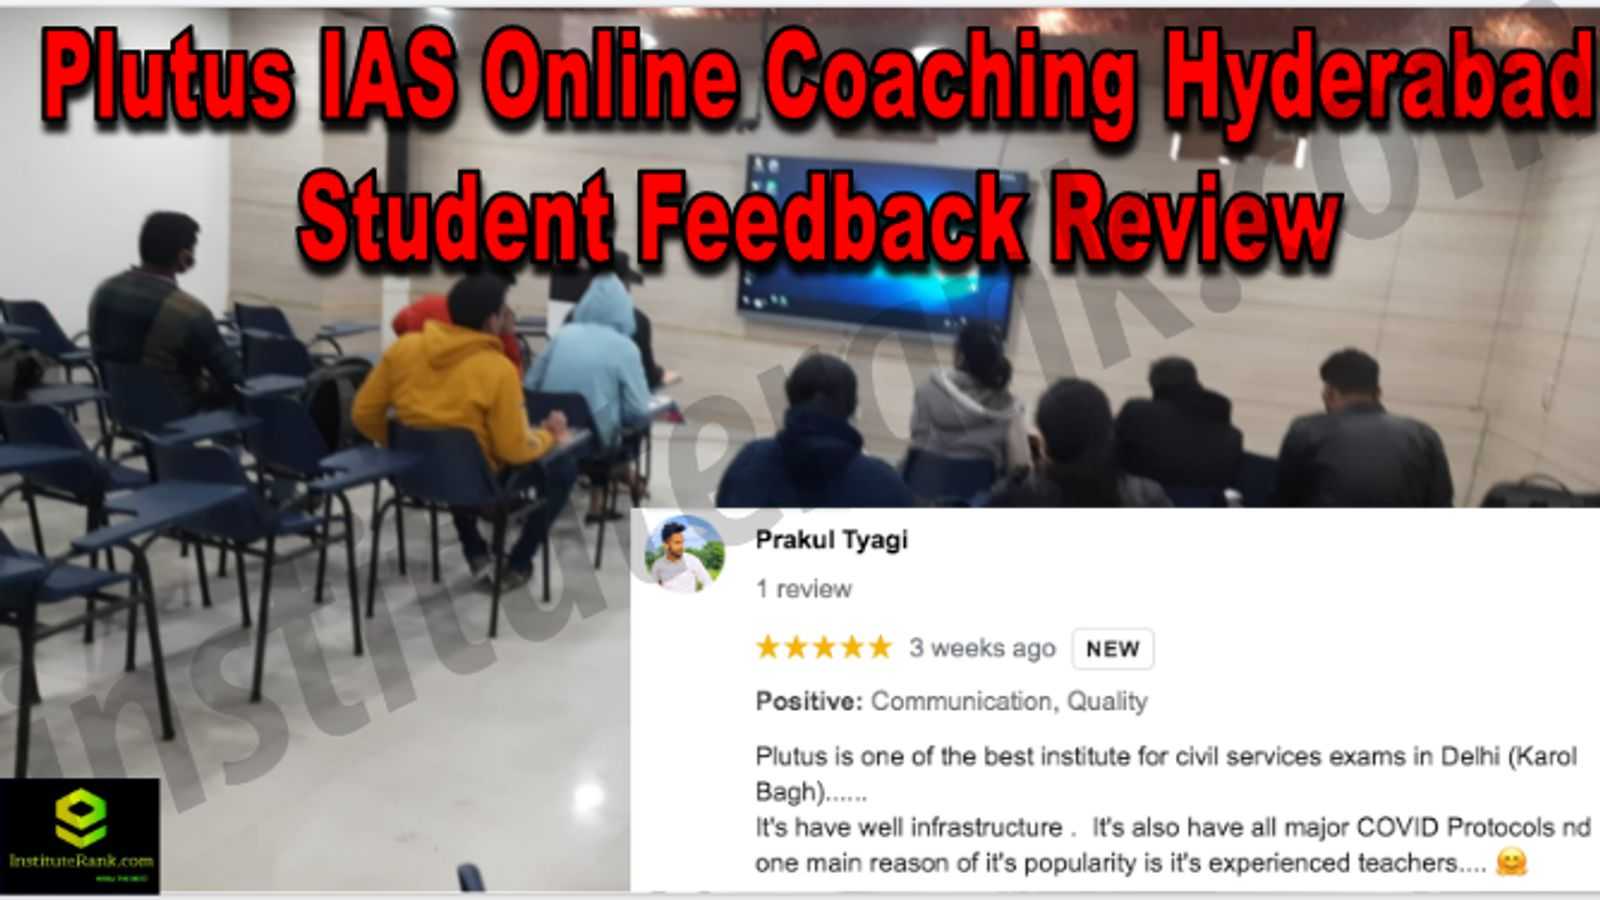 Plutus IAS Online Coaching Hyderabad Student Feedback Reviews